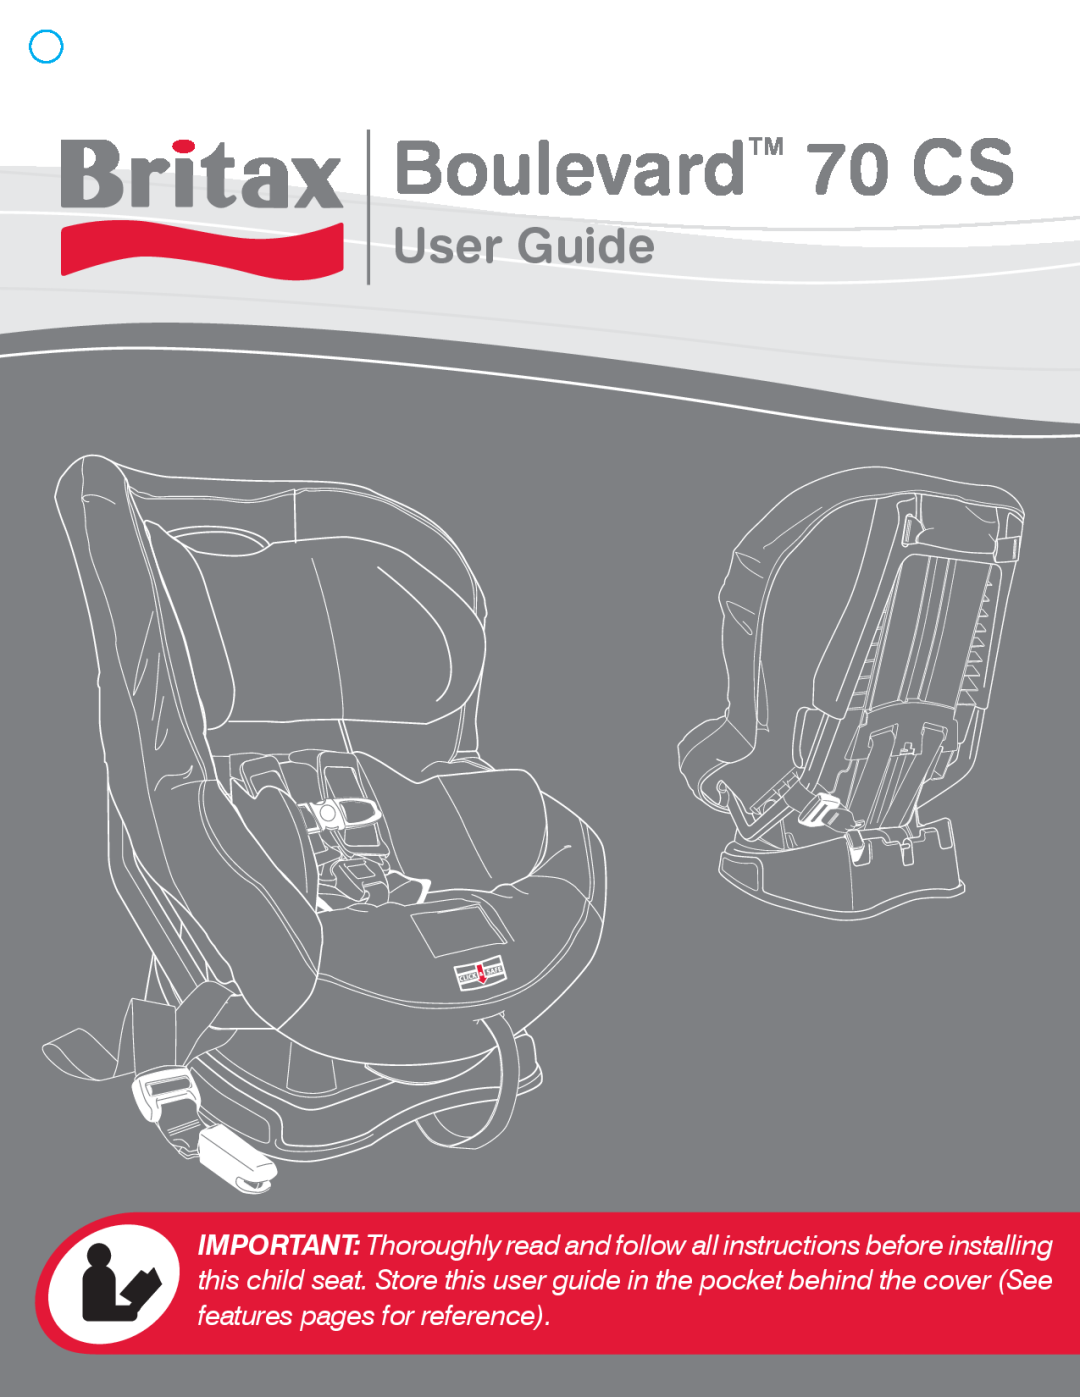 Britax manual BoulevardTM 70 CS, User Guide 